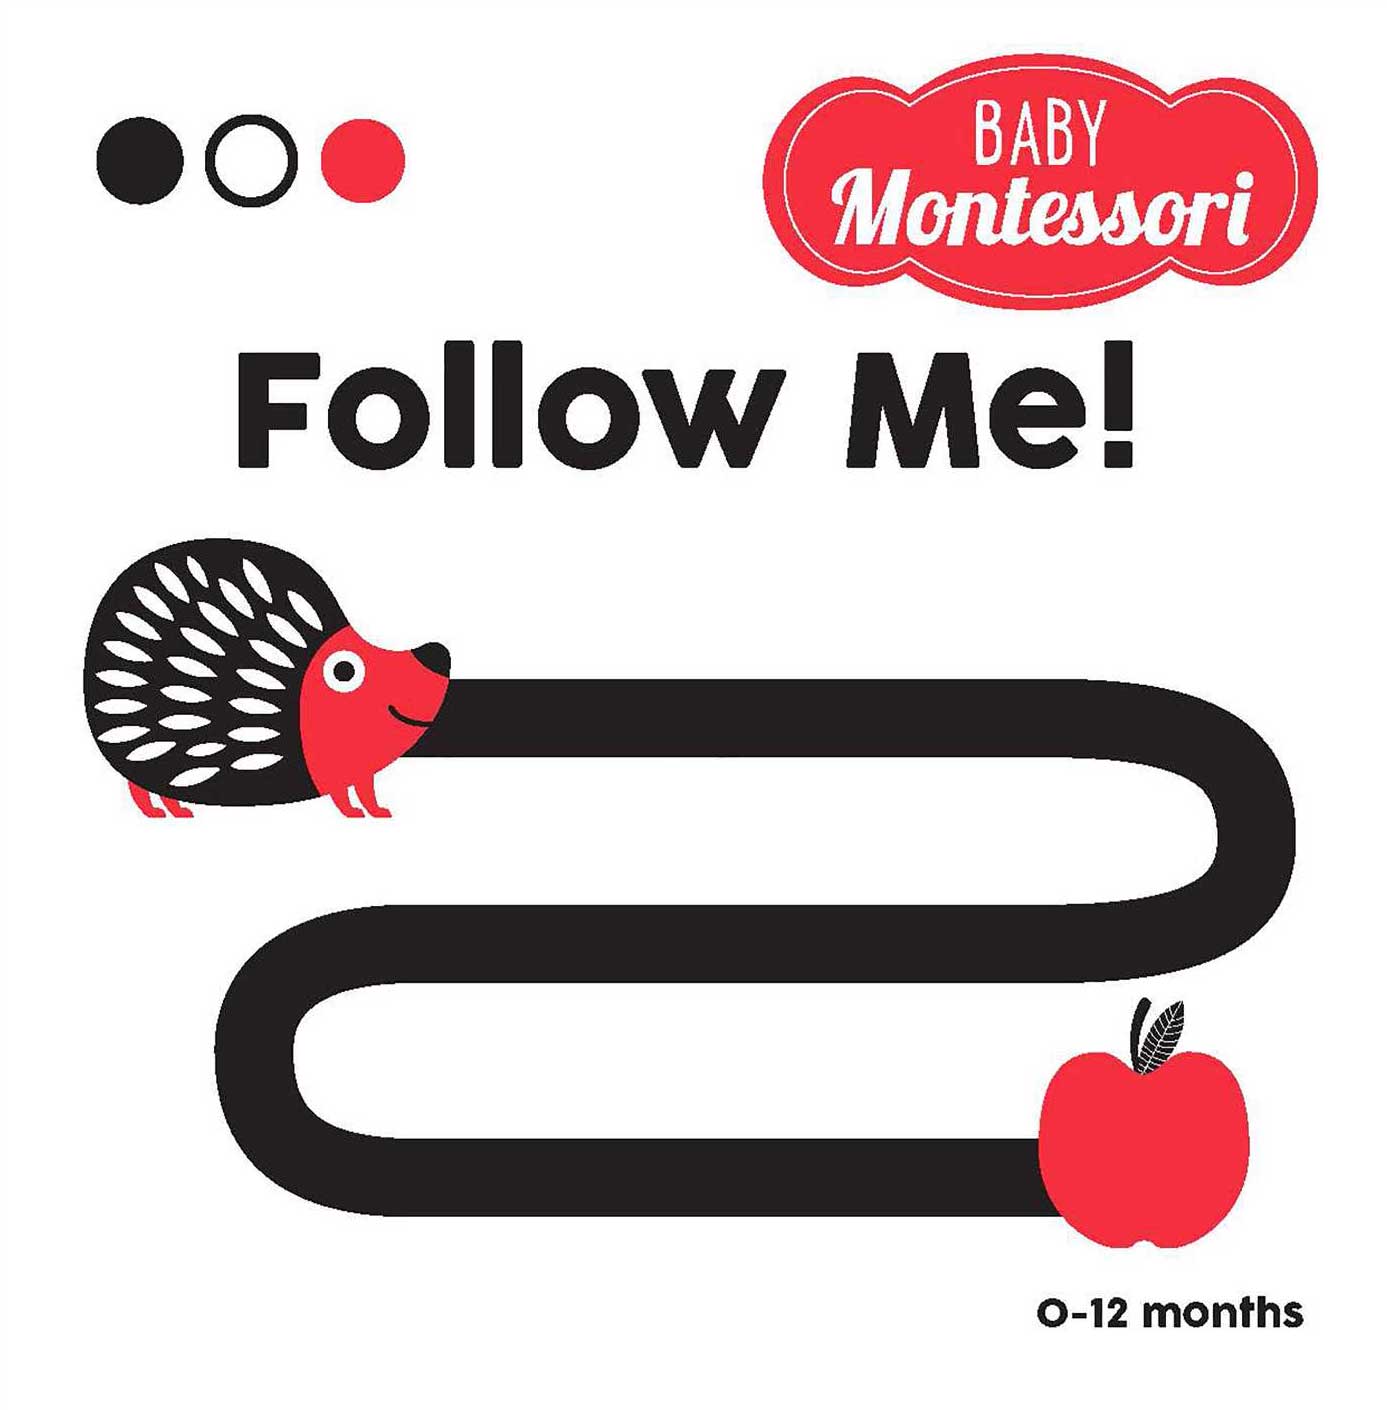 Follow me!: A baby Montessori book